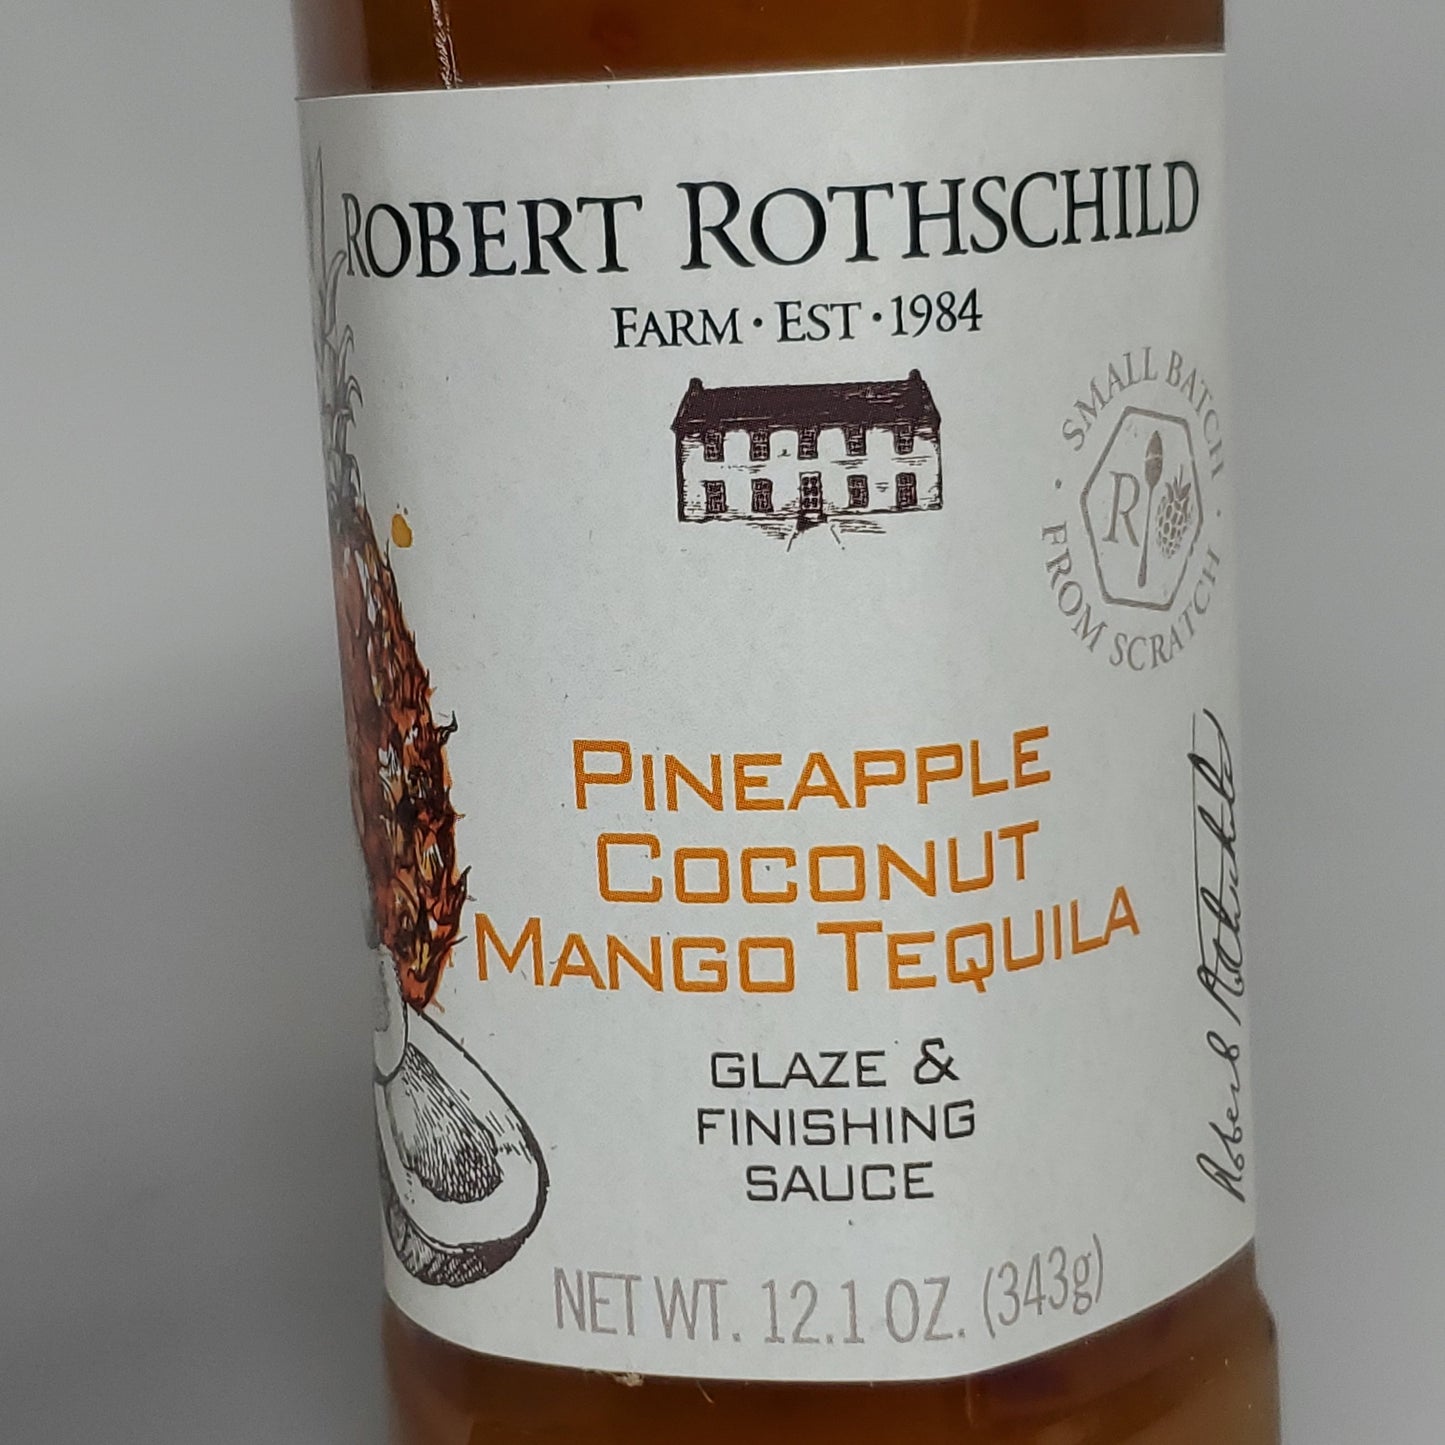 ZA@ ROBERT ROTHSCHILD 6-PK of Pineapple Coconut Mango Tequila Glaze & Finishing Sauce 12.1 Oz 06/23 E